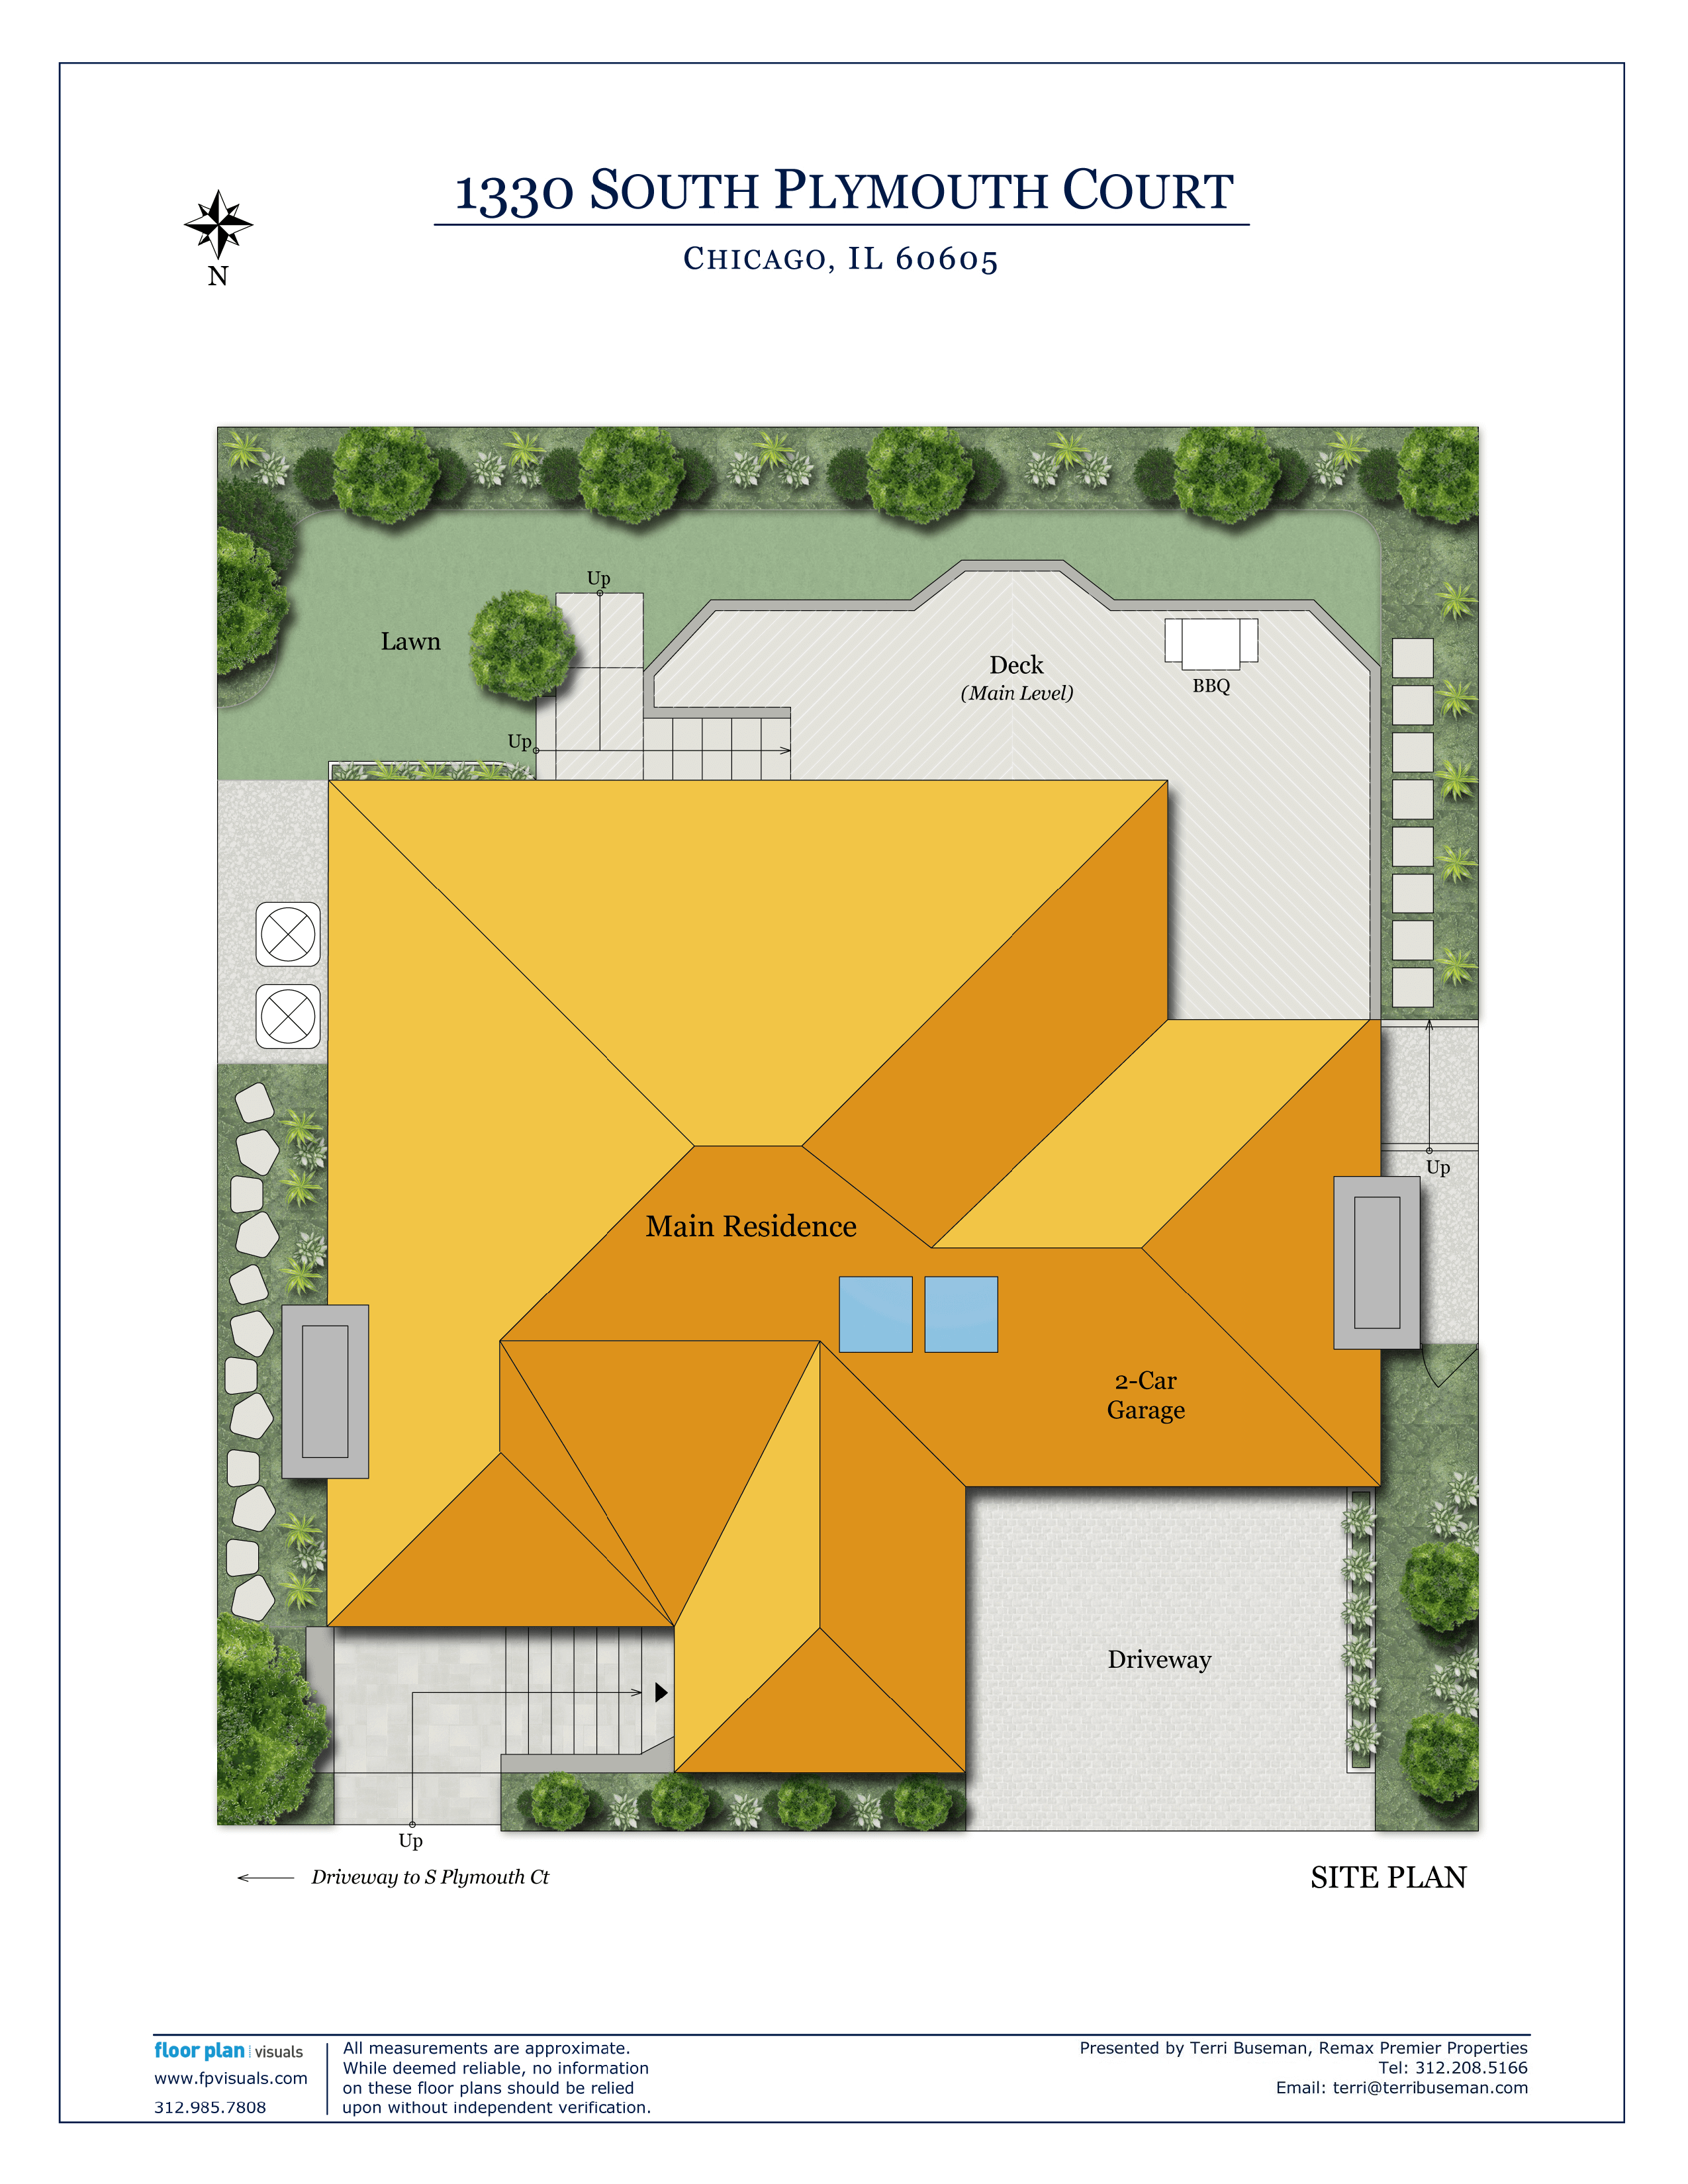 1330 s plymouth floor plan - Main EXTERIOR